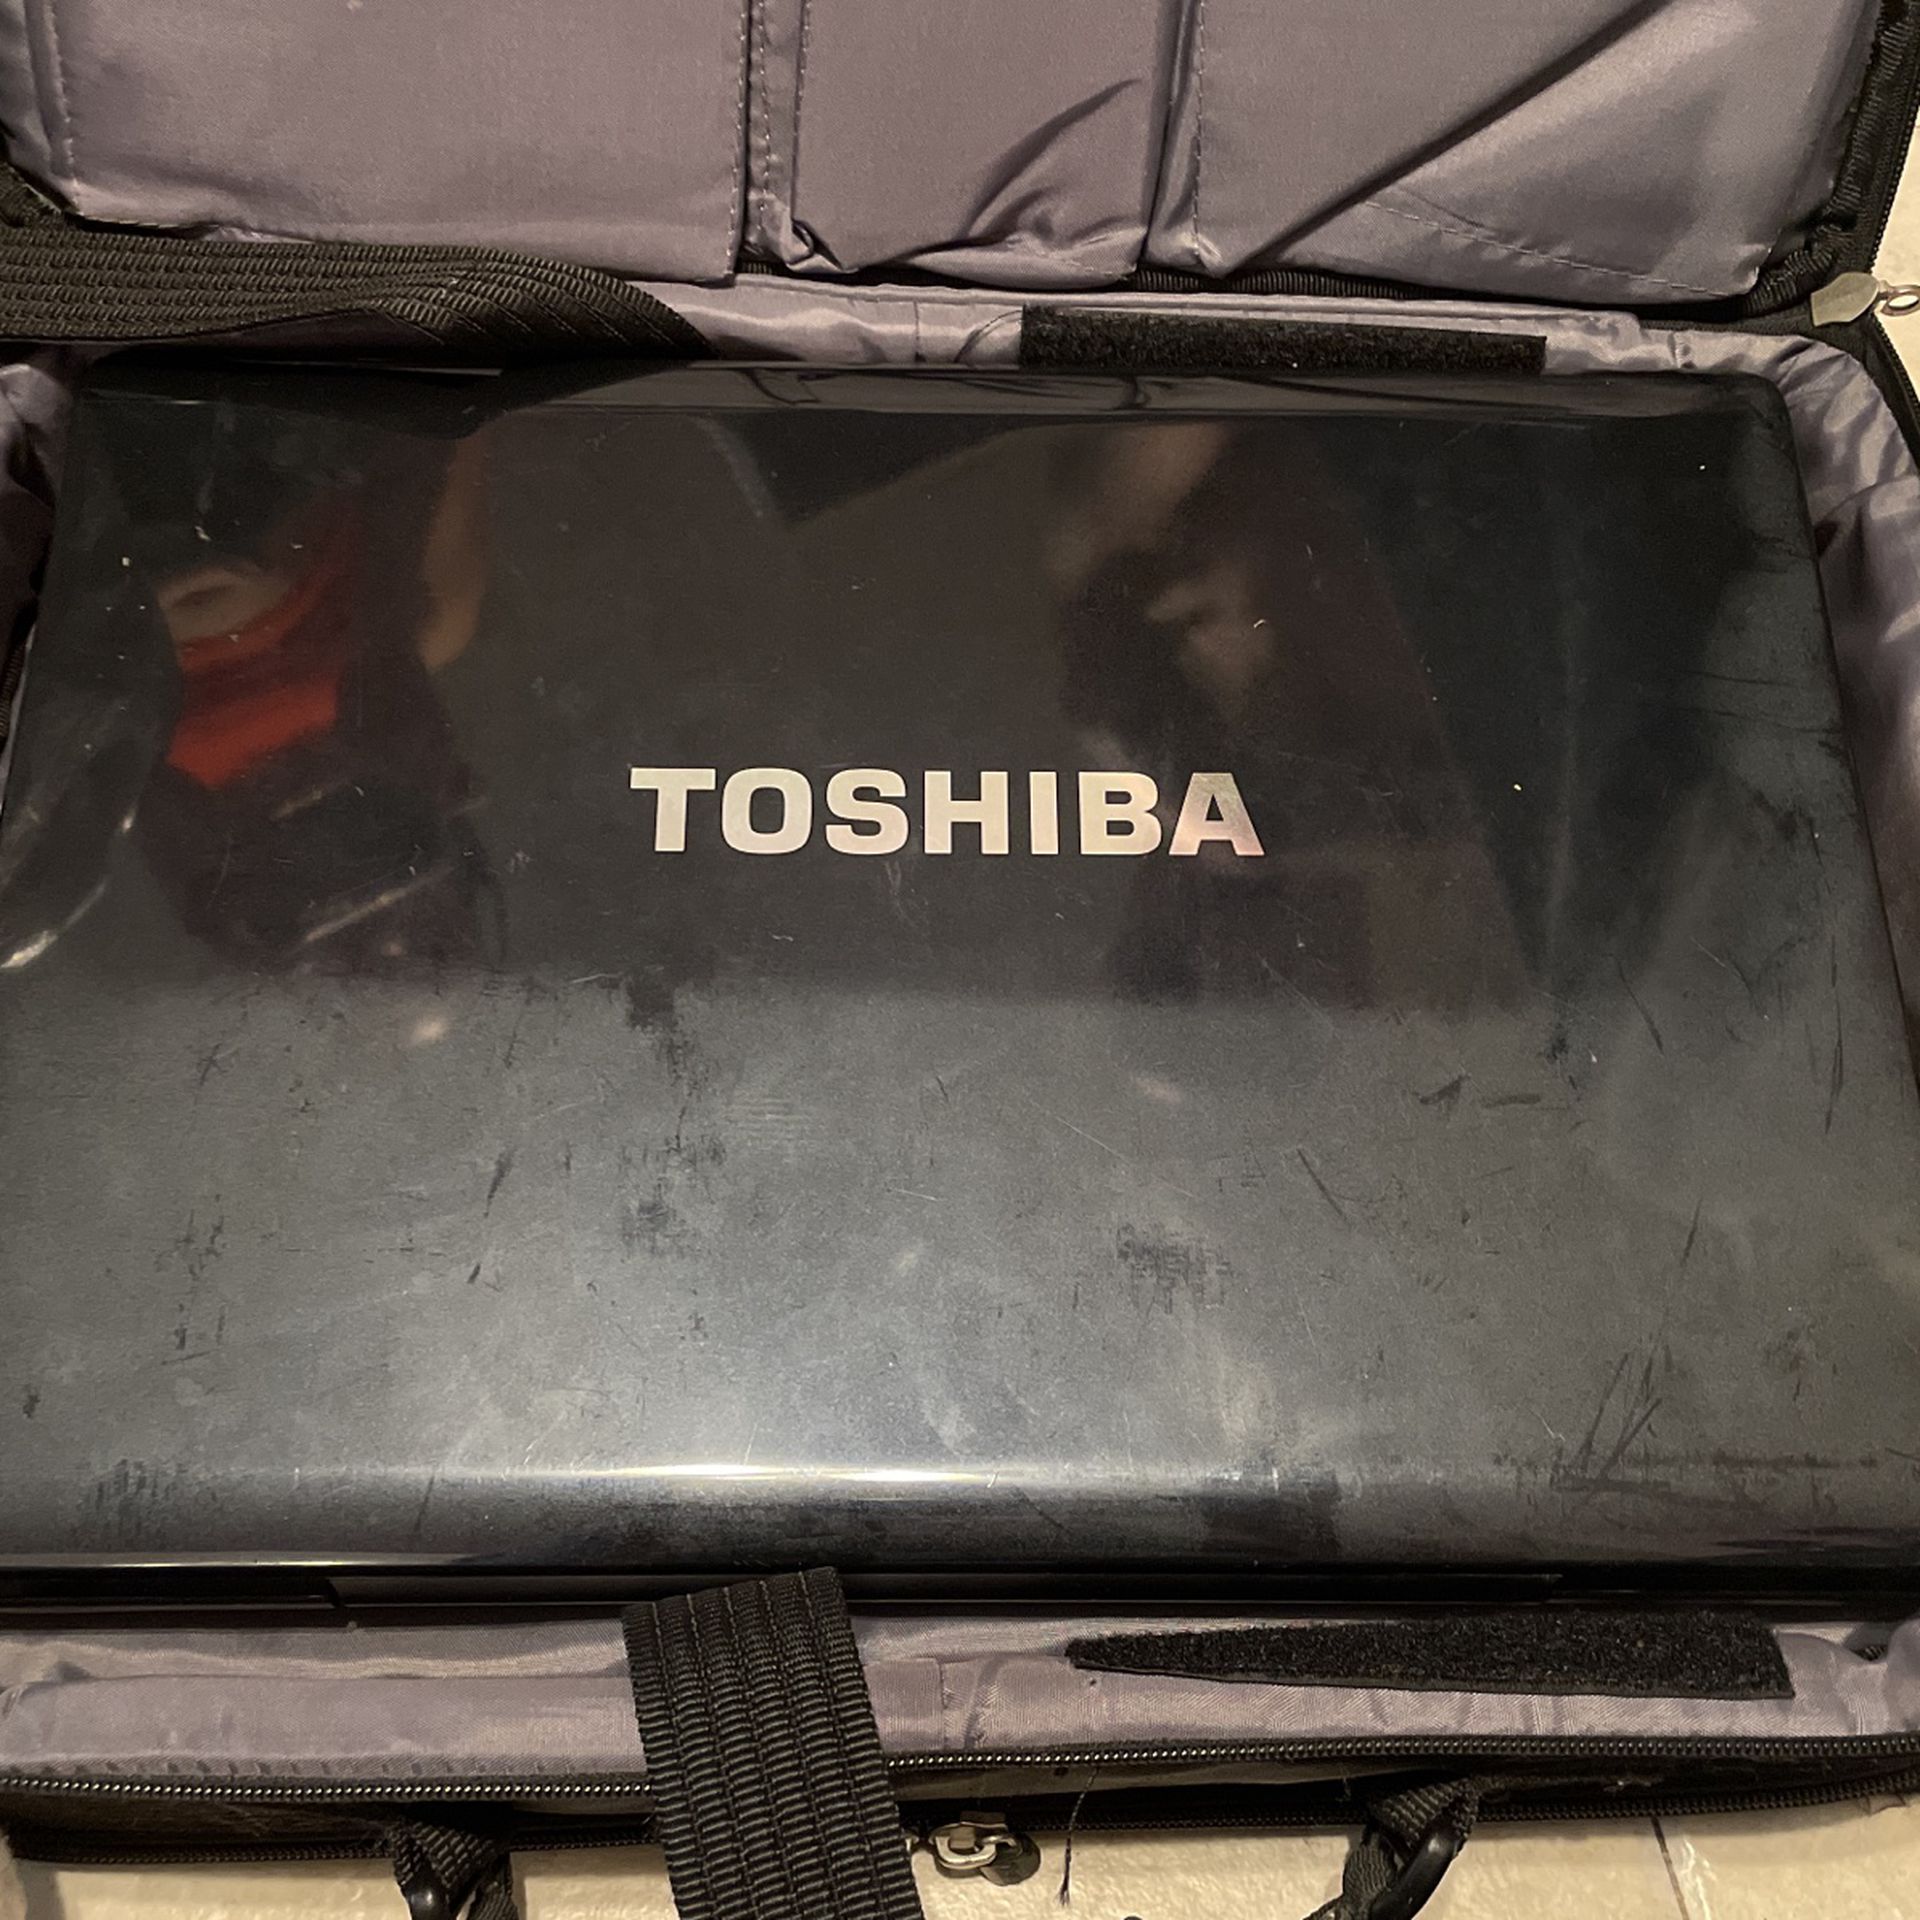 Toshiba Laptop & Case